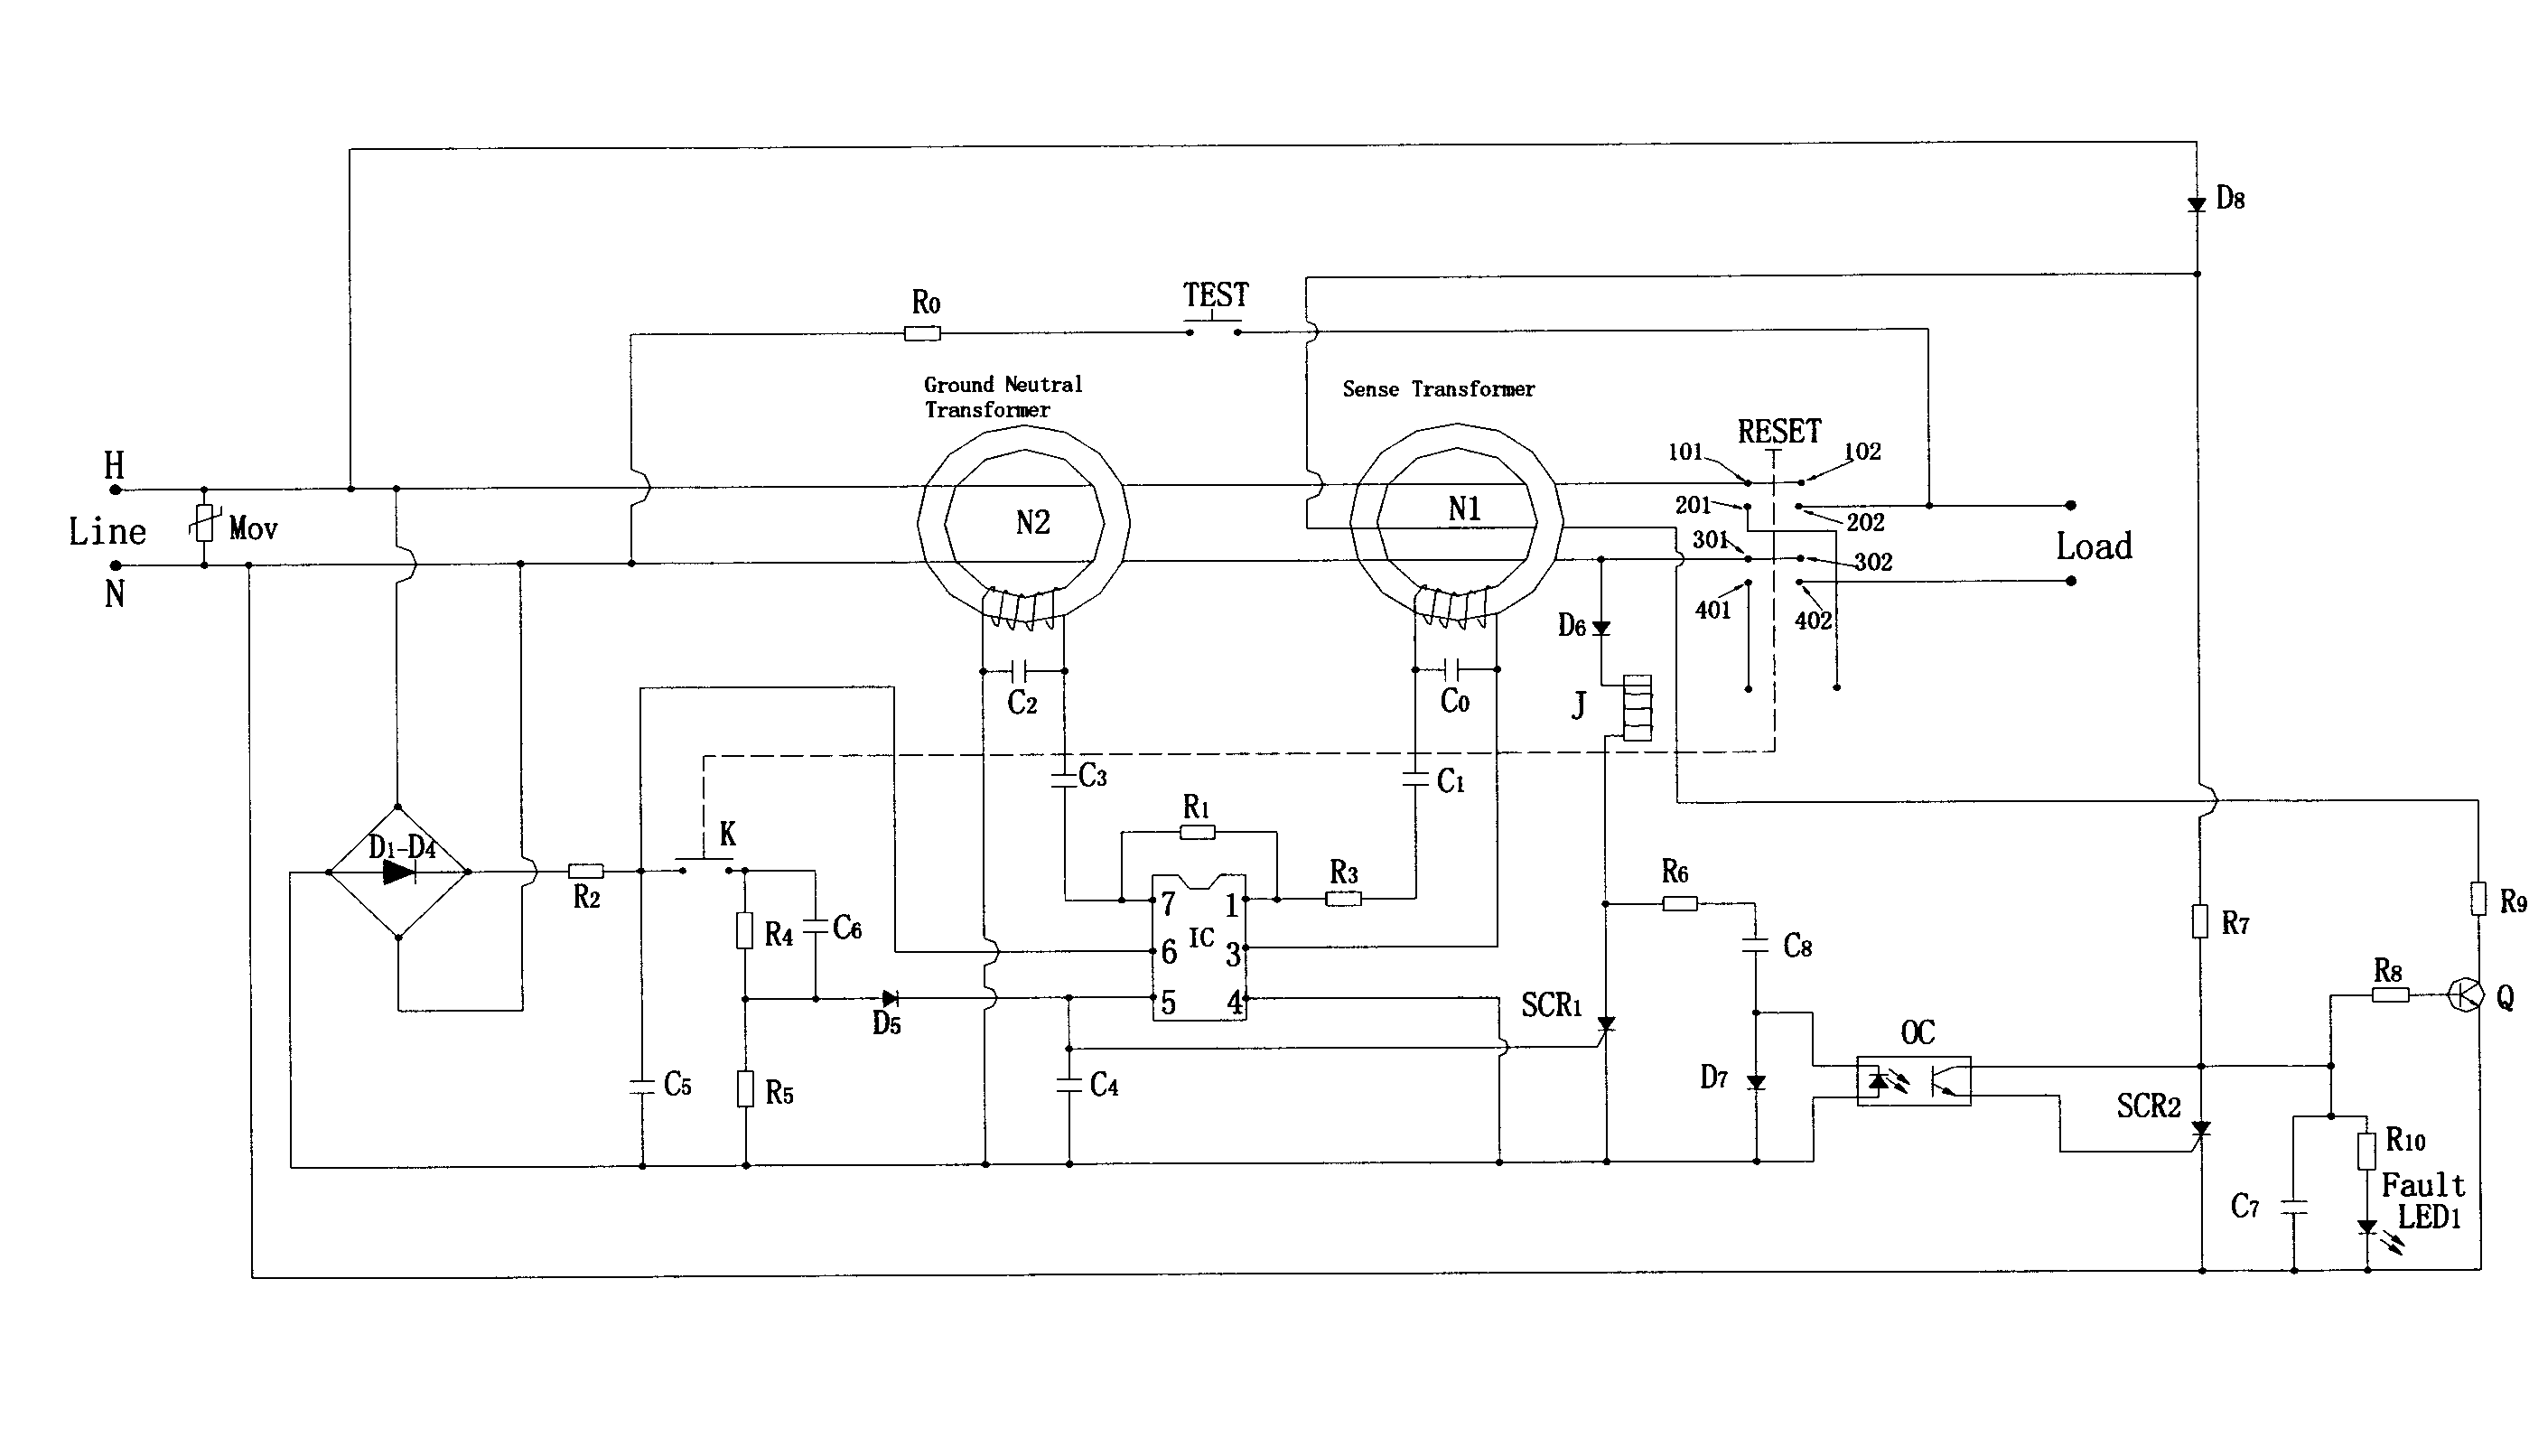 Control circuit of ground fault circuit interrupter (GFCI)